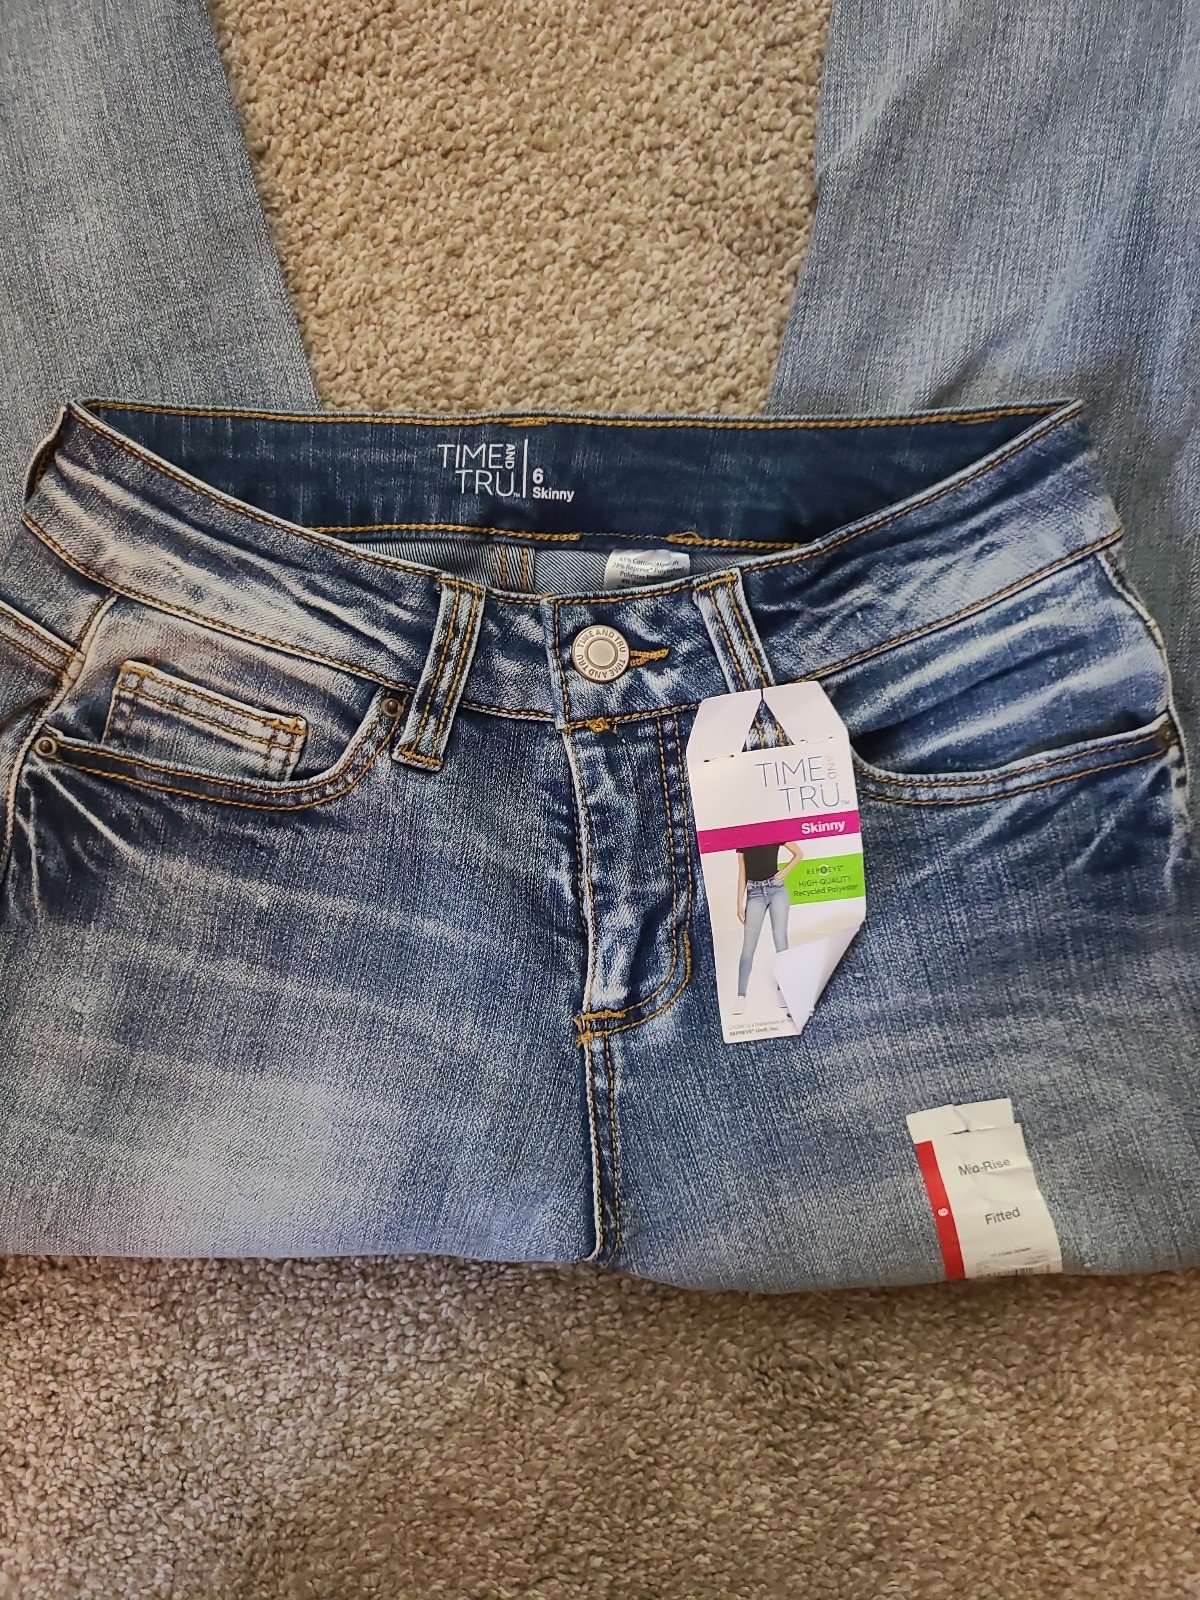 The Best Seller NWT size 6 light wash denim skinny jeans hj7BysRkq High Quaity